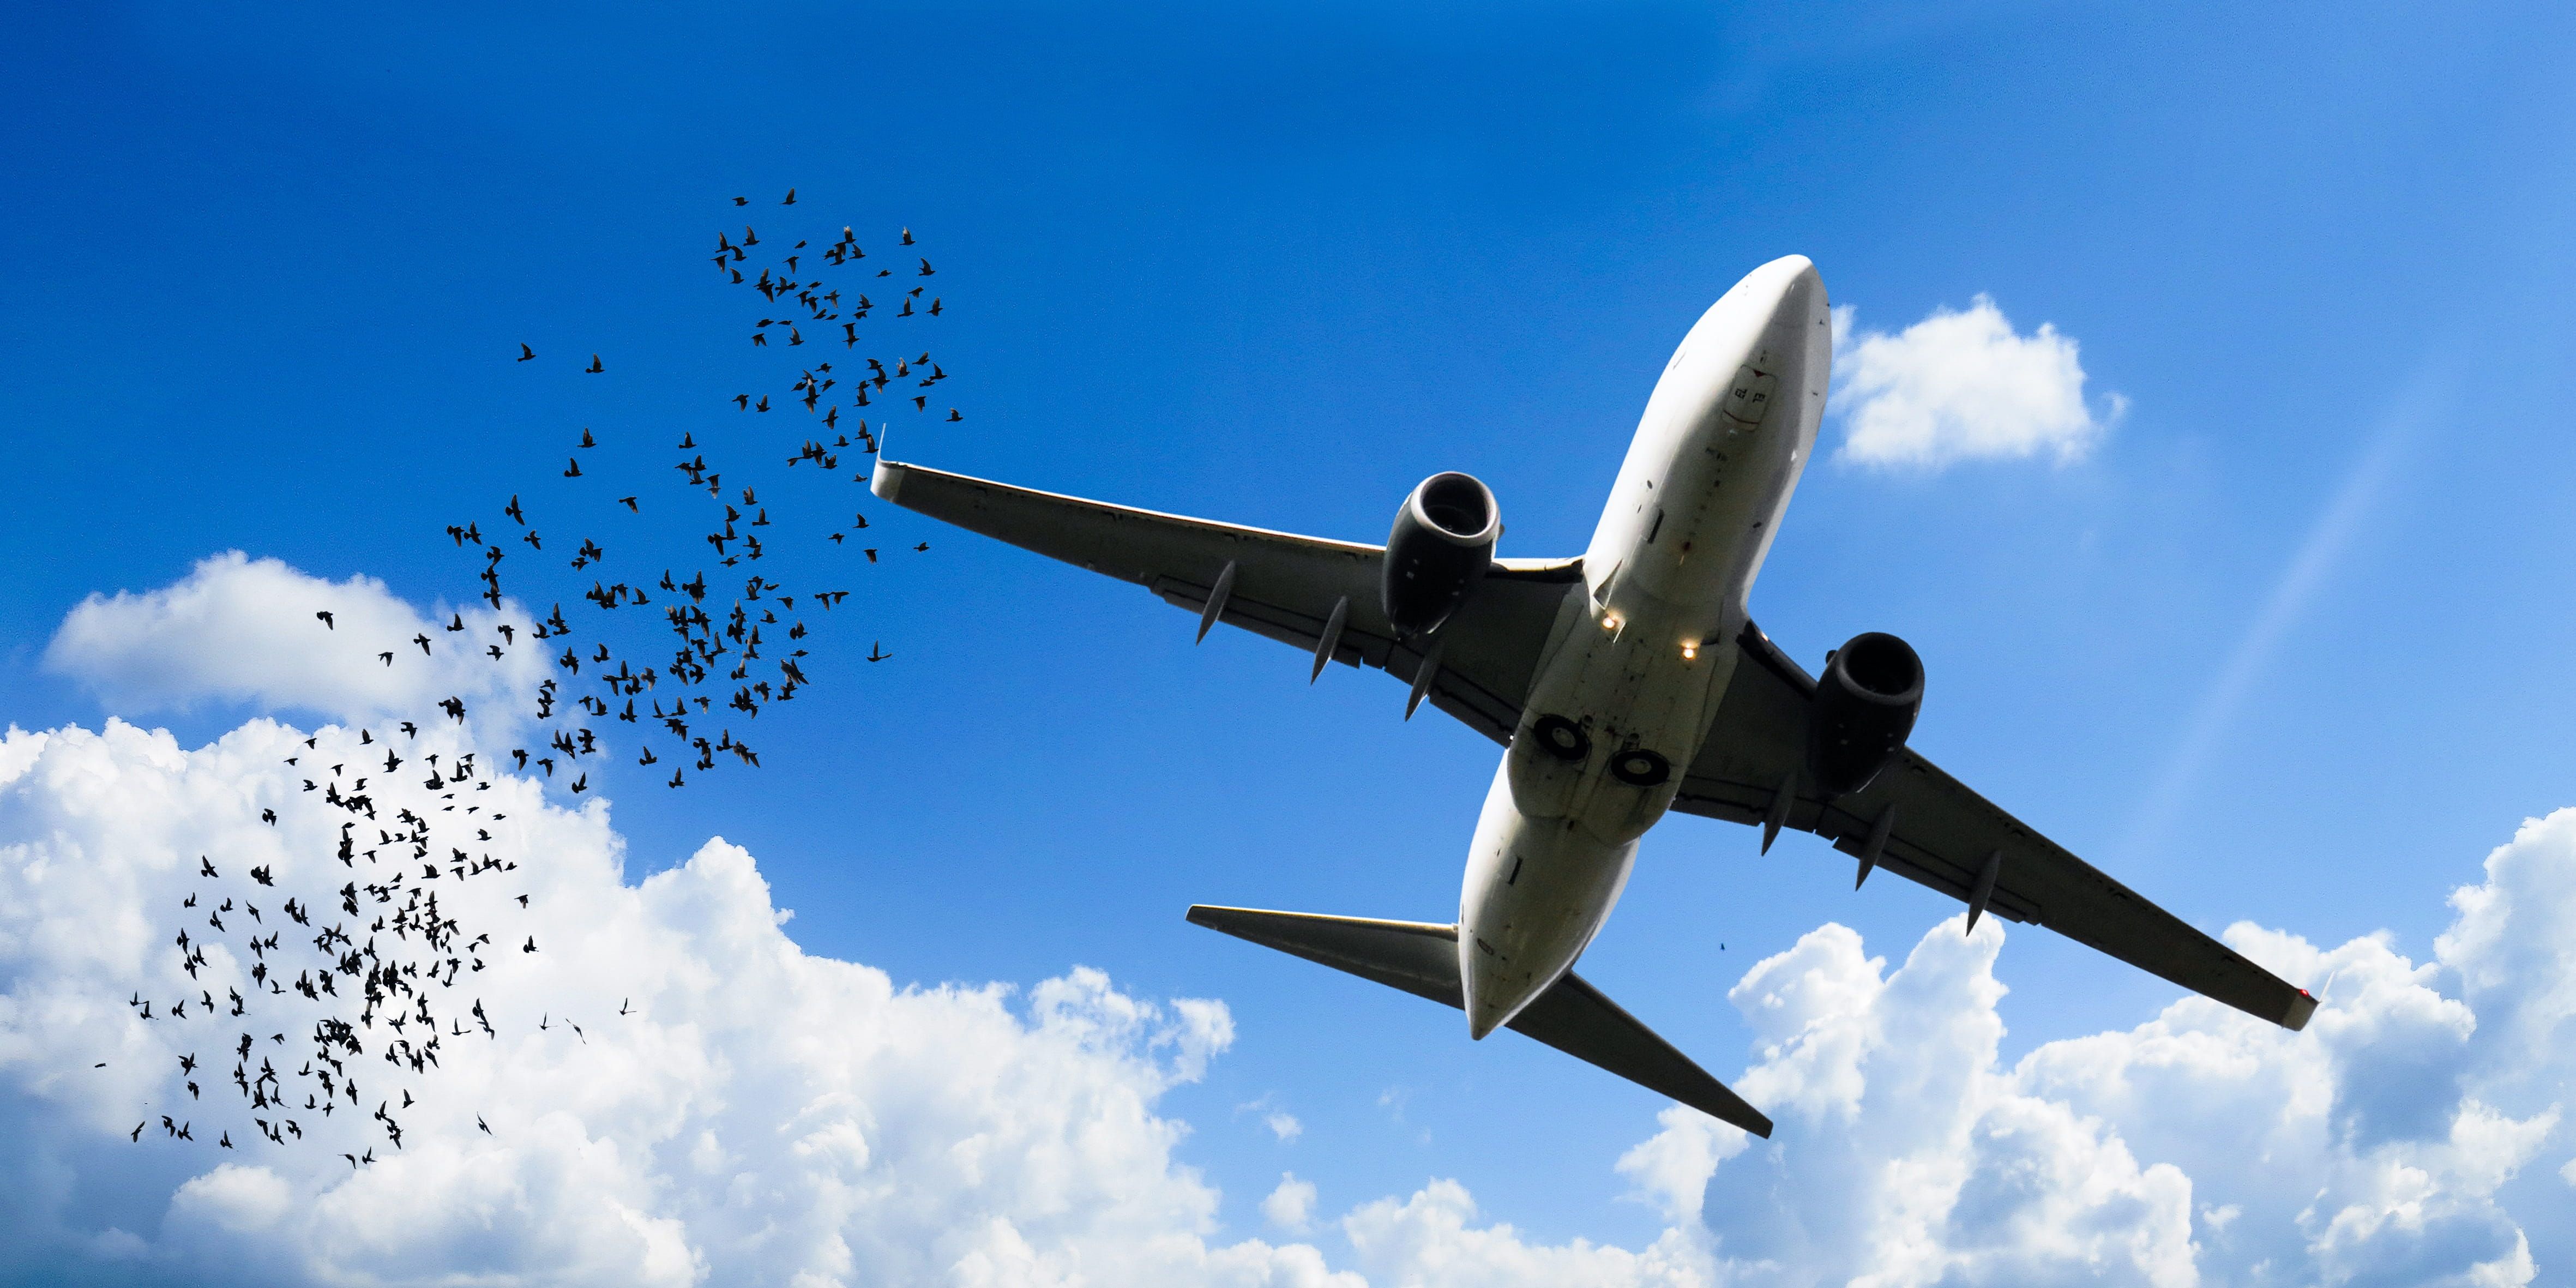 An aircraft flying next to a flock of birds.